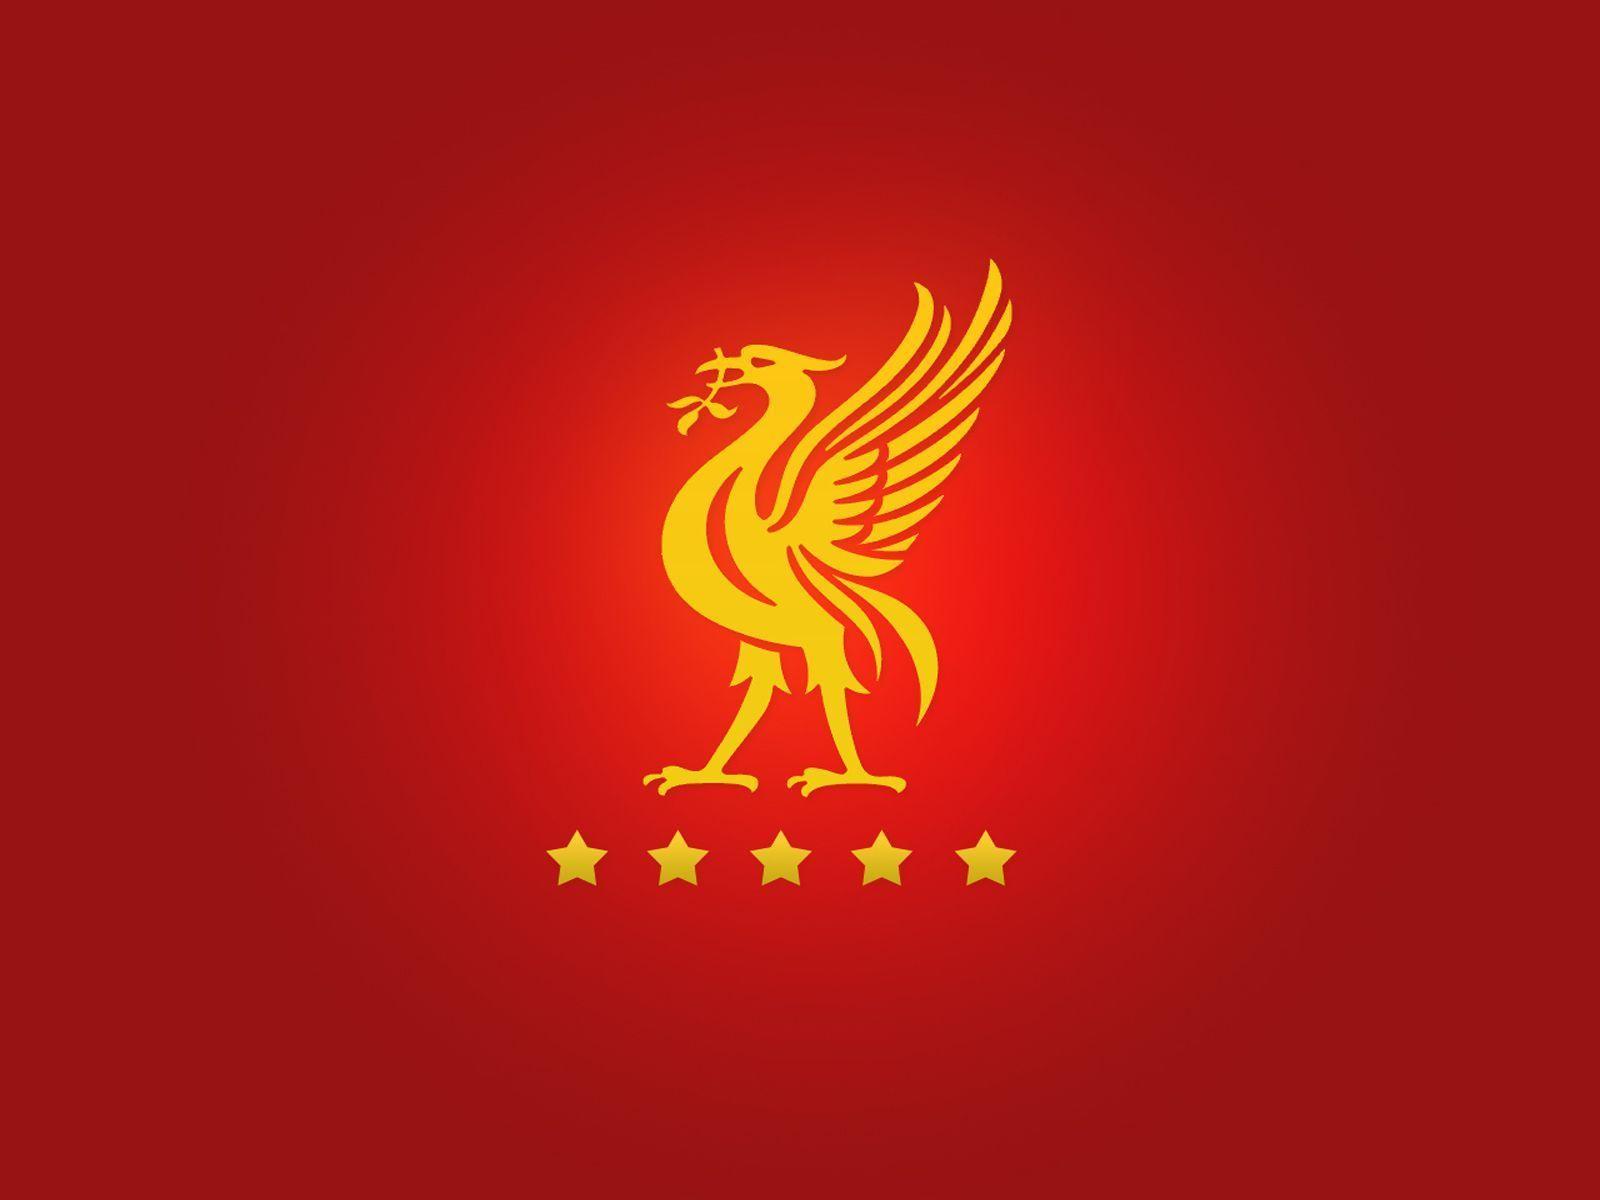 Liverpool Fc Badge Wallpaper. worldcupq